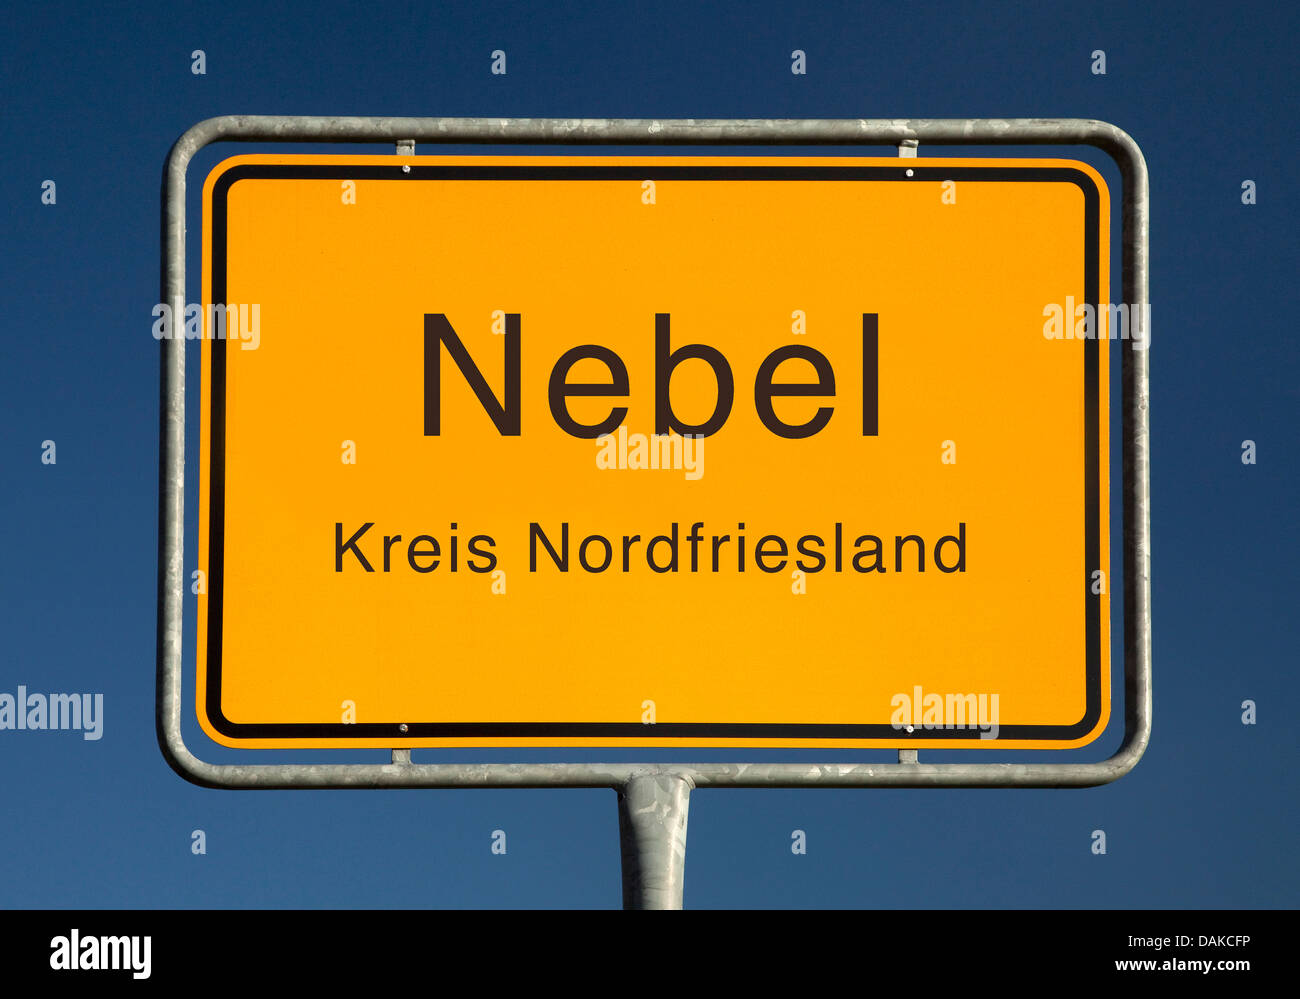 Nebel place name sign, Germany, Schleswig-Holstein, Kreis Nordfriesland, Nebel Stock Photo